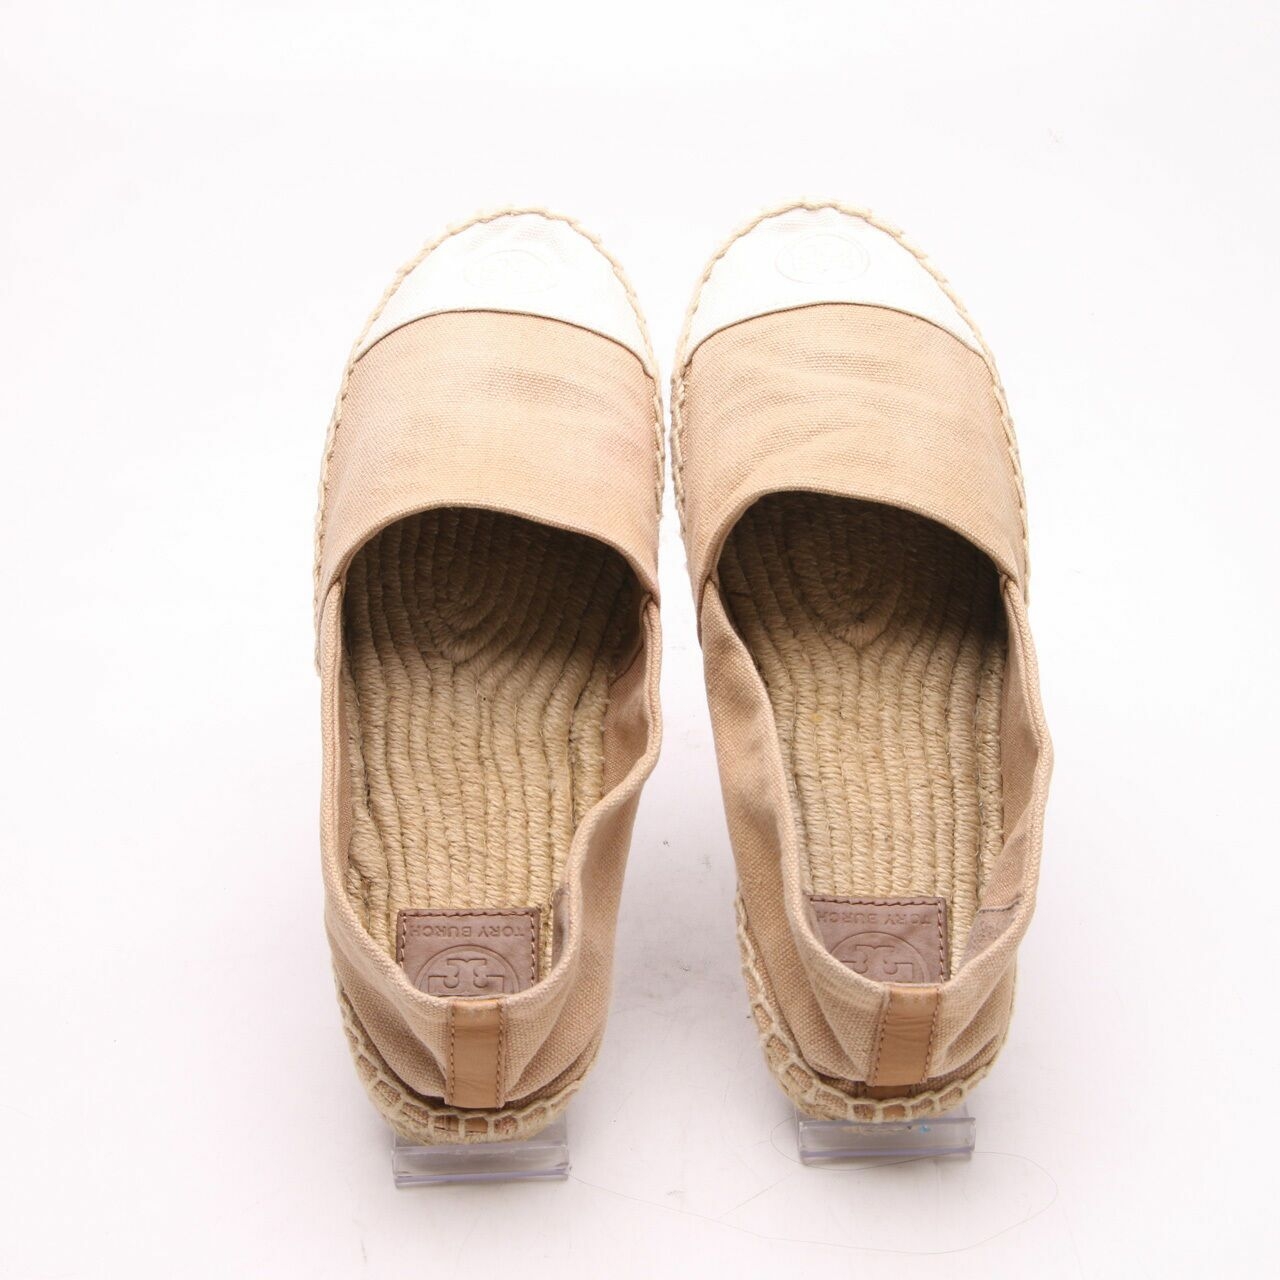 Tory Burch Espadrille Khaki/Ivory Colorblock Flats Shoes